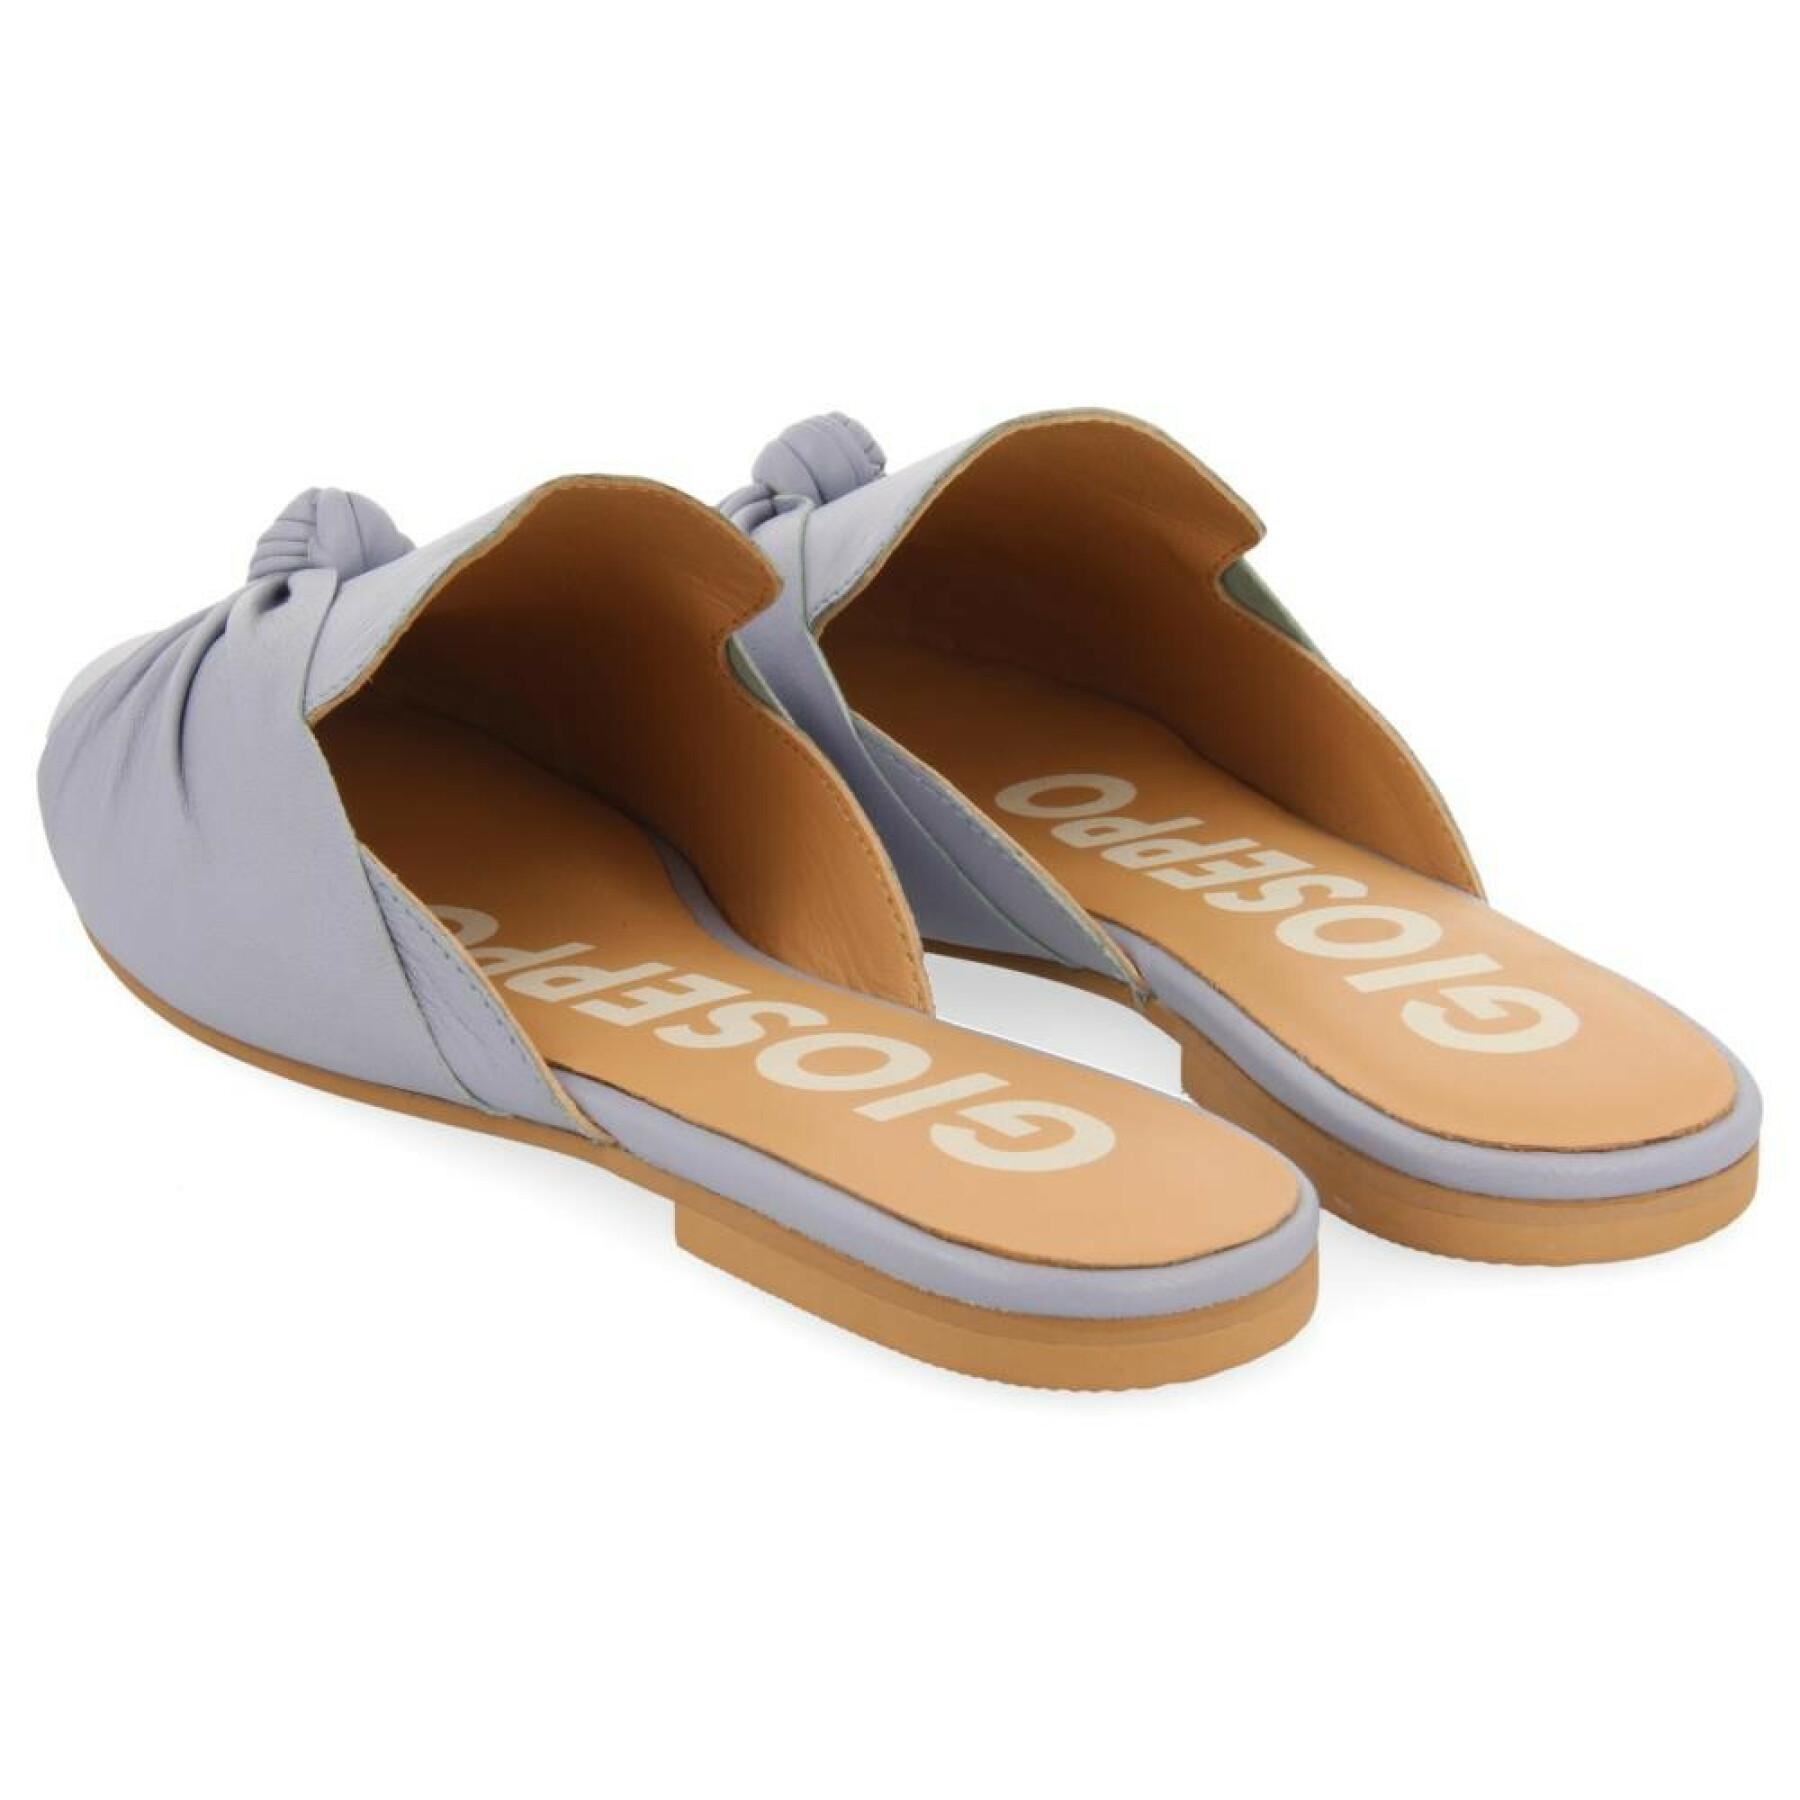 Women's sandals Gioseppo Nicoya